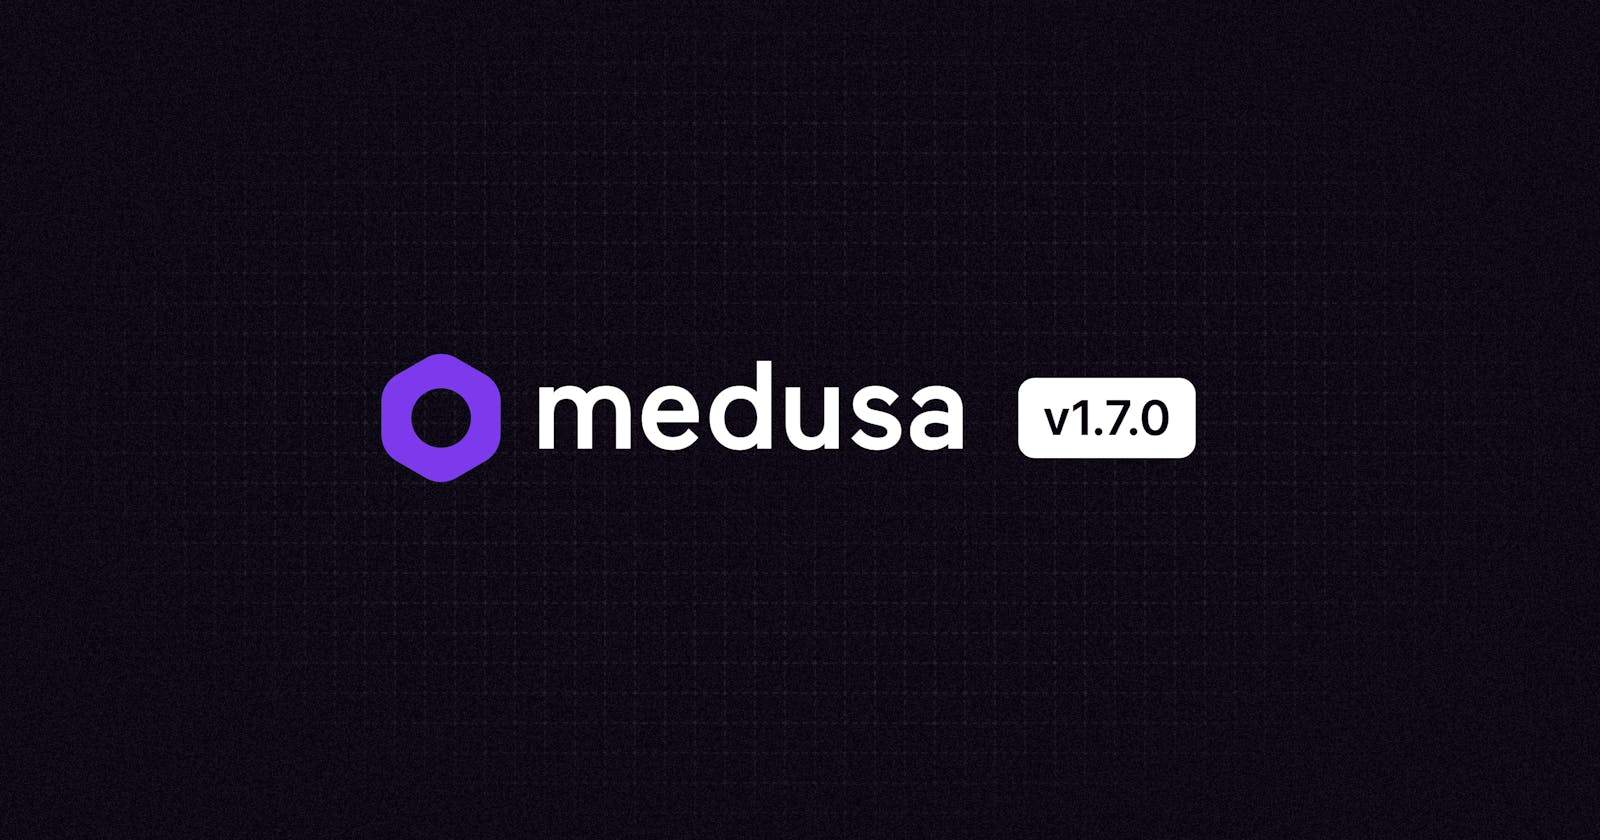 Medusa 1.7: Performance Improvement, B2B Launch, and more!